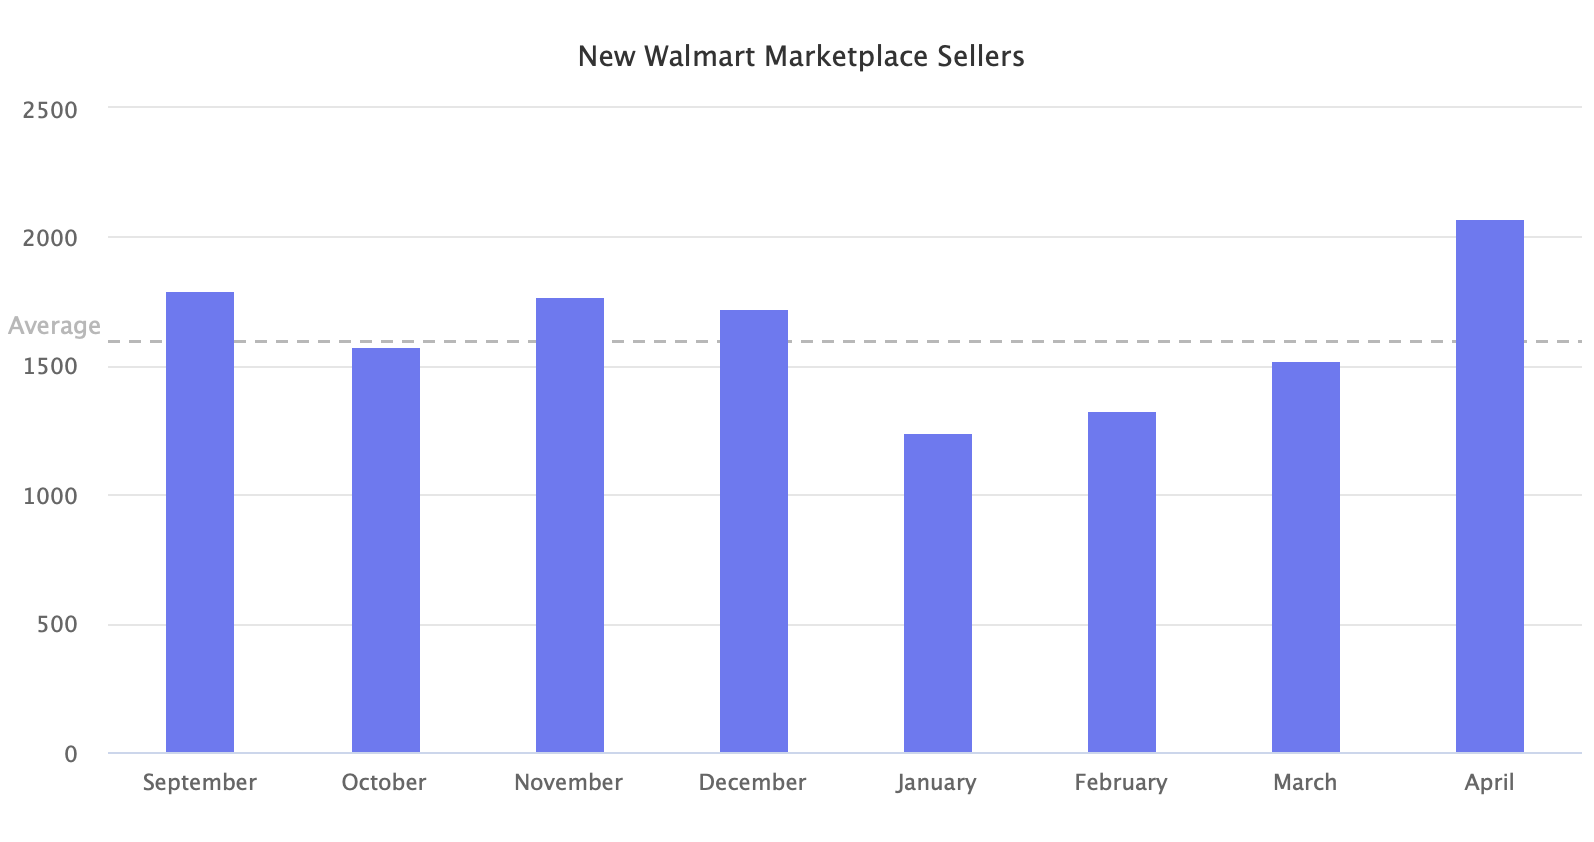 New Walmart Marketplace Sellers